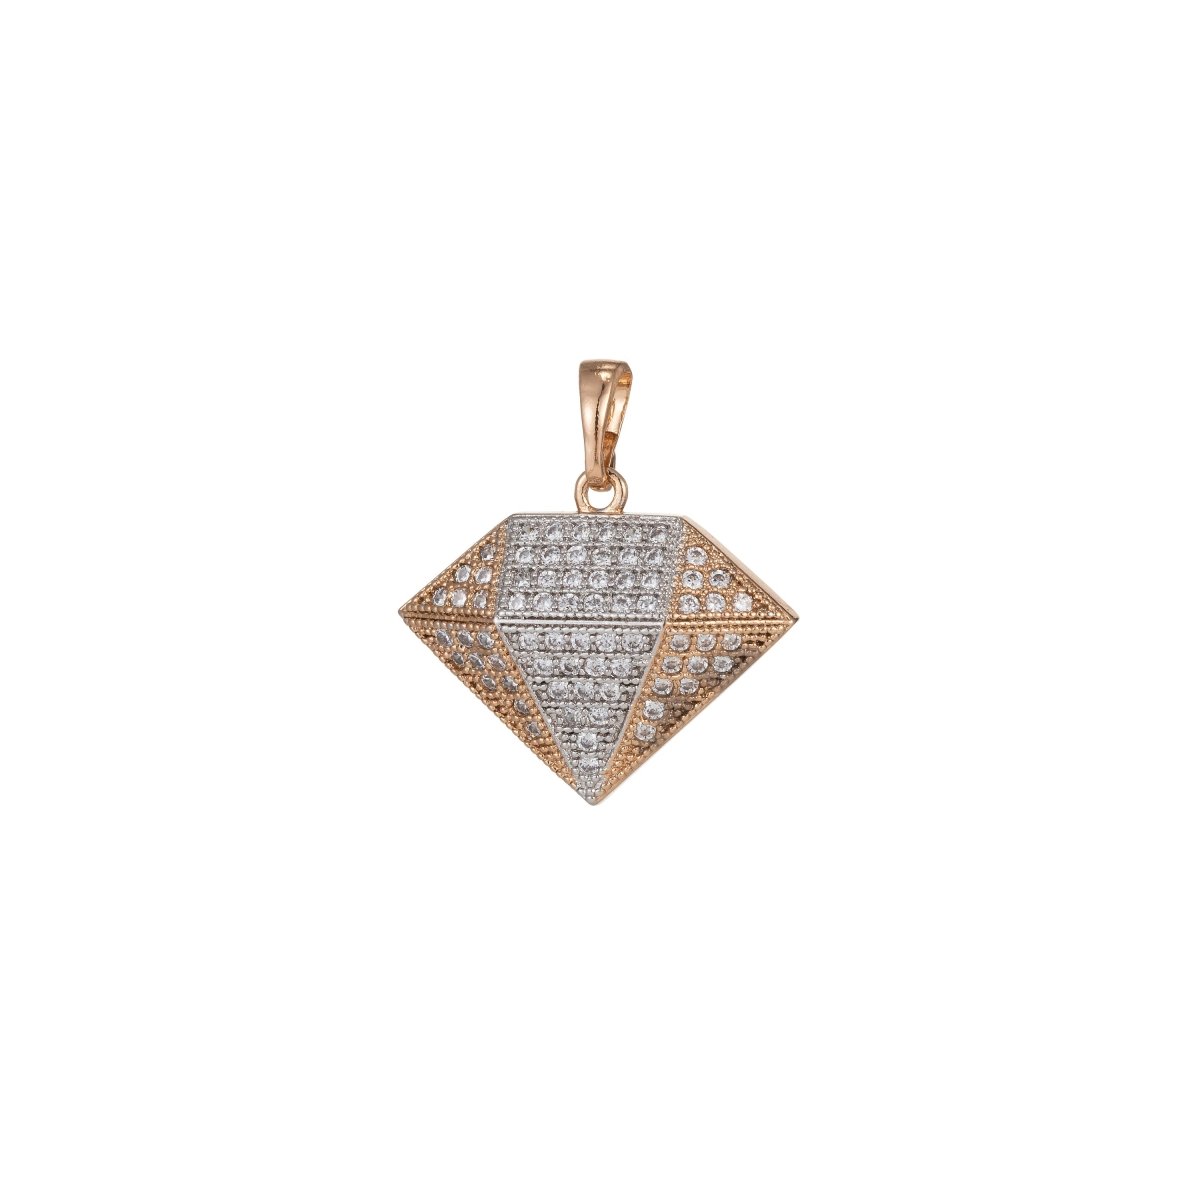 18k Gold Filled Micro Pave CZ Diamond Pendant Charm, Dual Color Diamond Pendant Charm, Gold Filled Diamond Pendant, For DIY Jewelry I-525 - DLUXCA